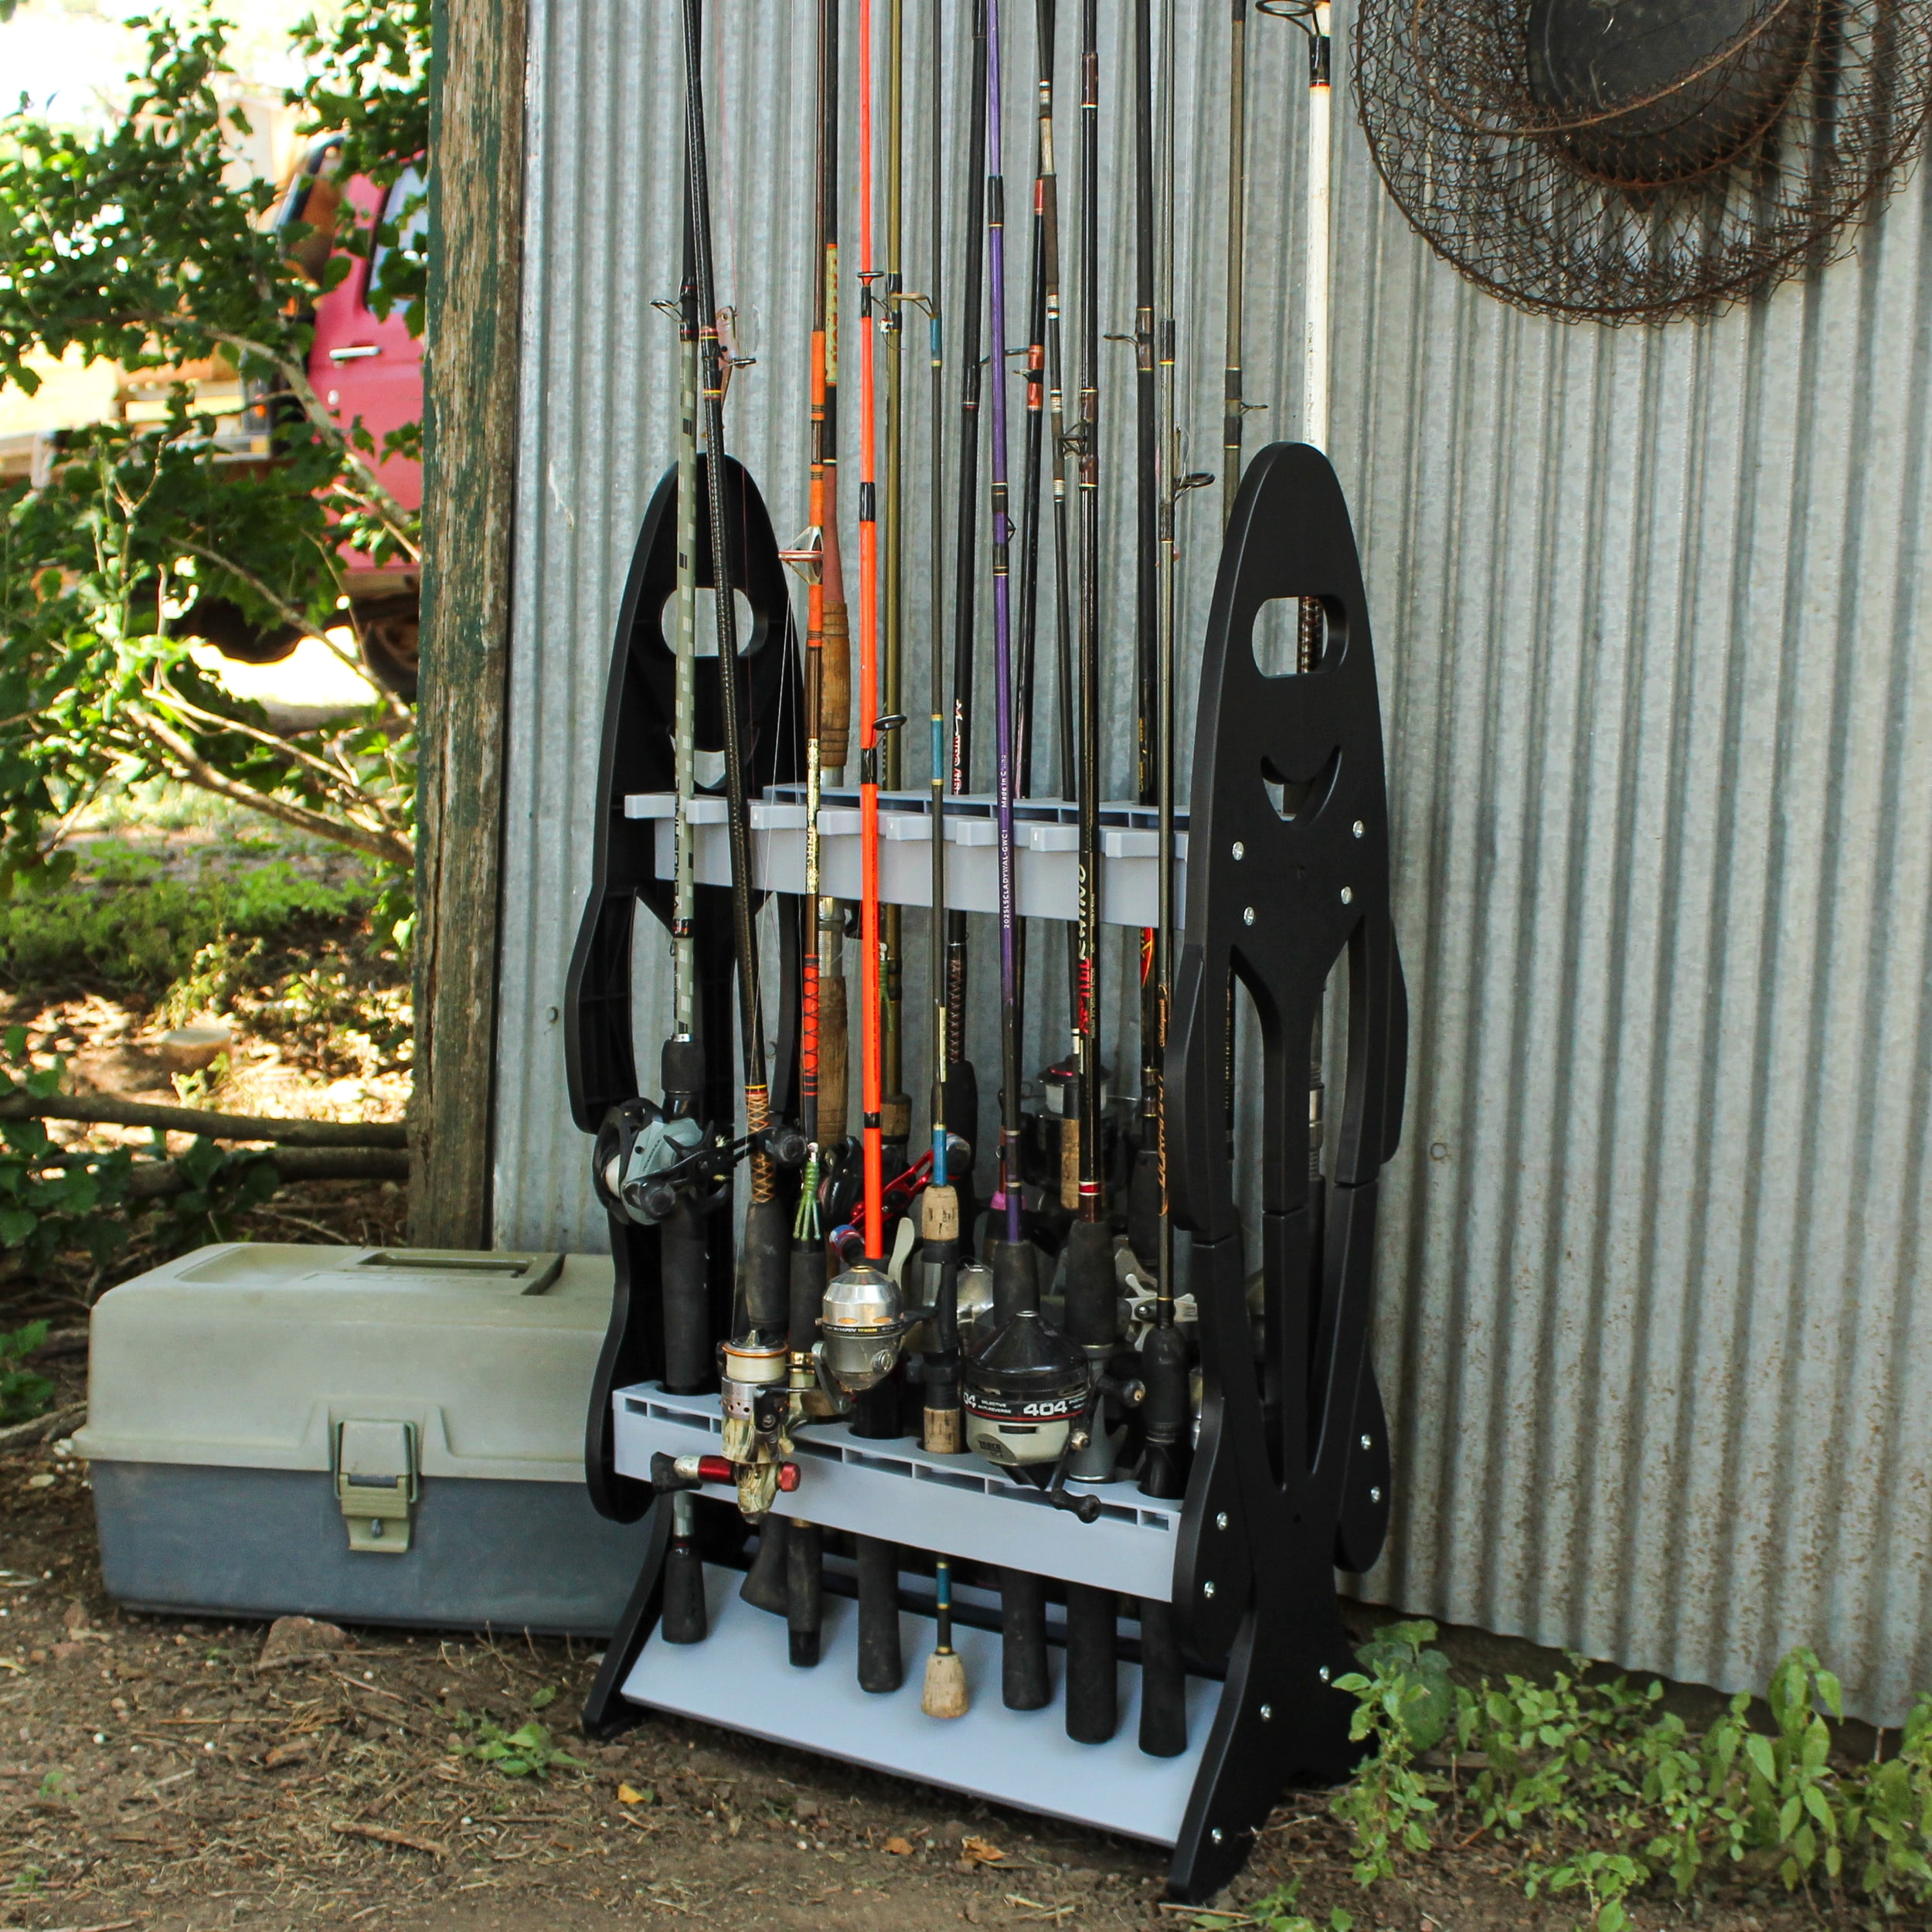 Redline Canyon Home or Garage Fishing Rod Holder Storage for